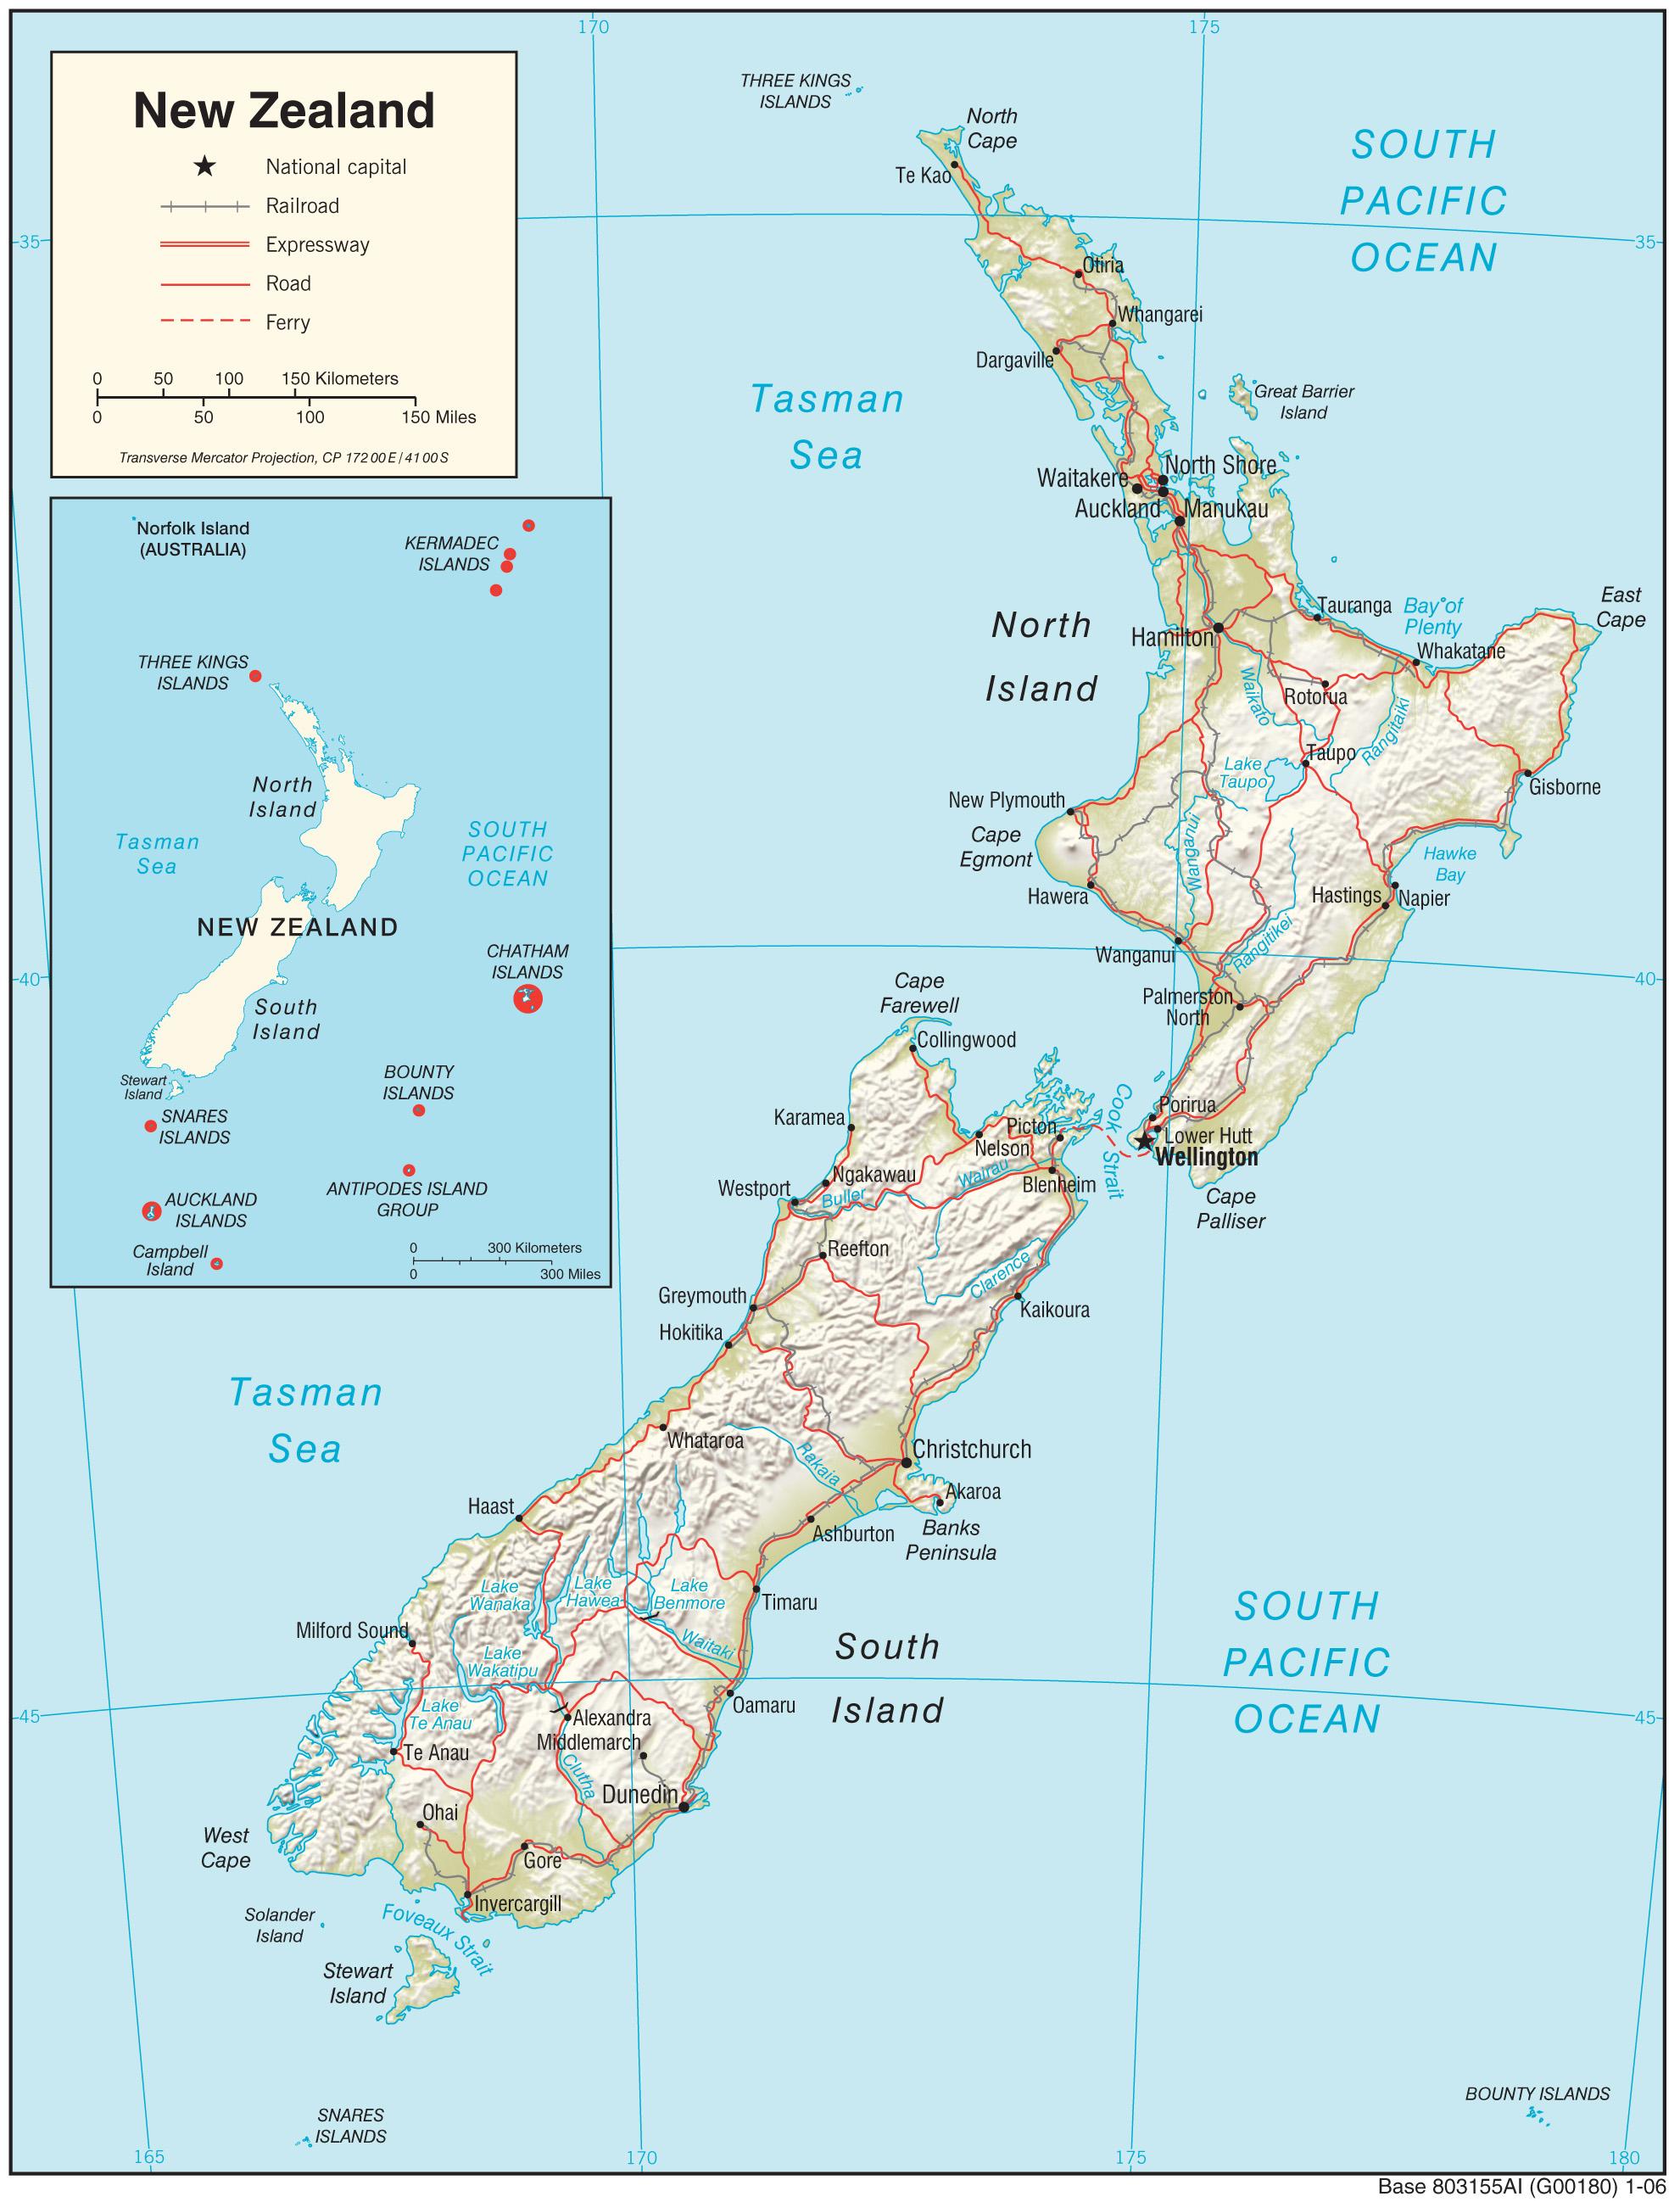 Nya zeeland karta - Nya zeeland karta hd (Australien och Nya Zeeland